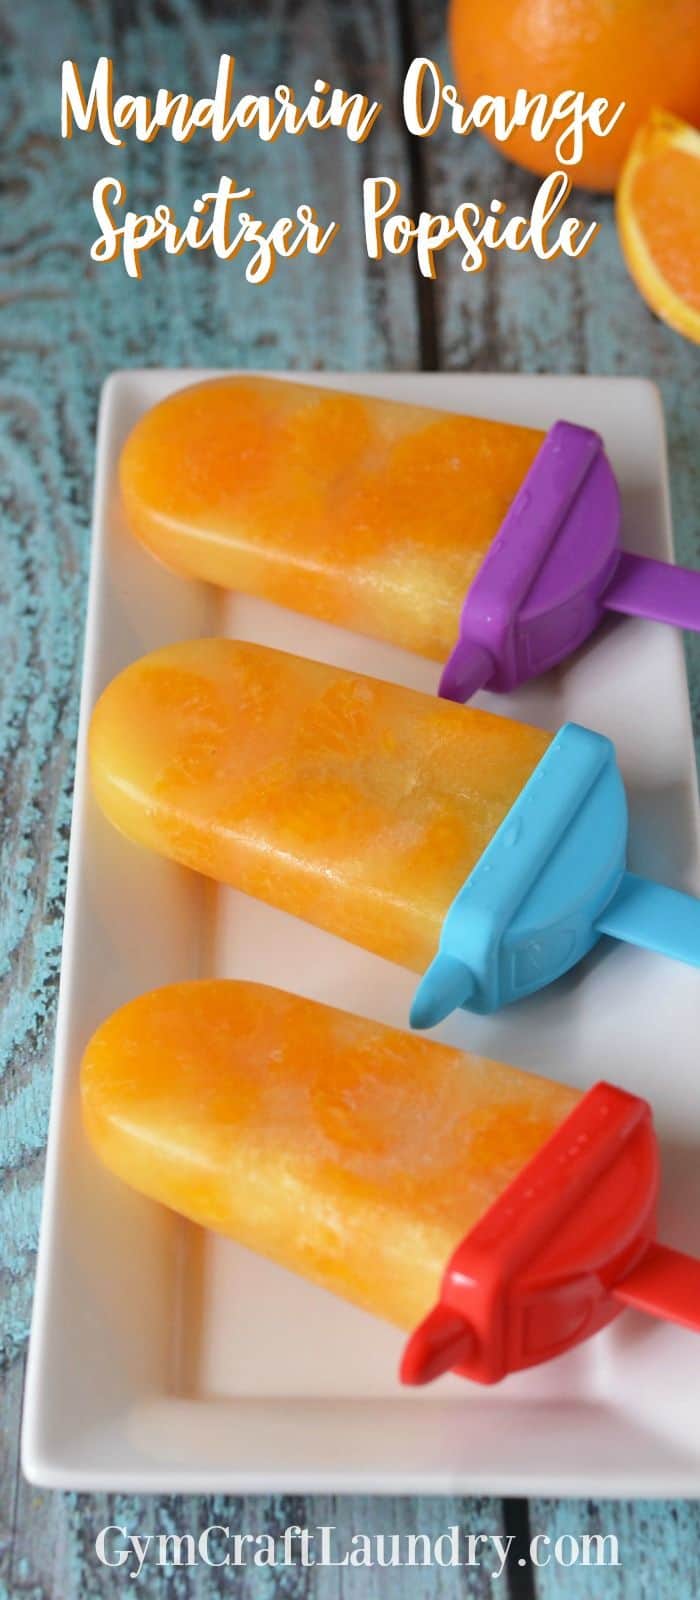 Mandarin orange spritzer popsicles